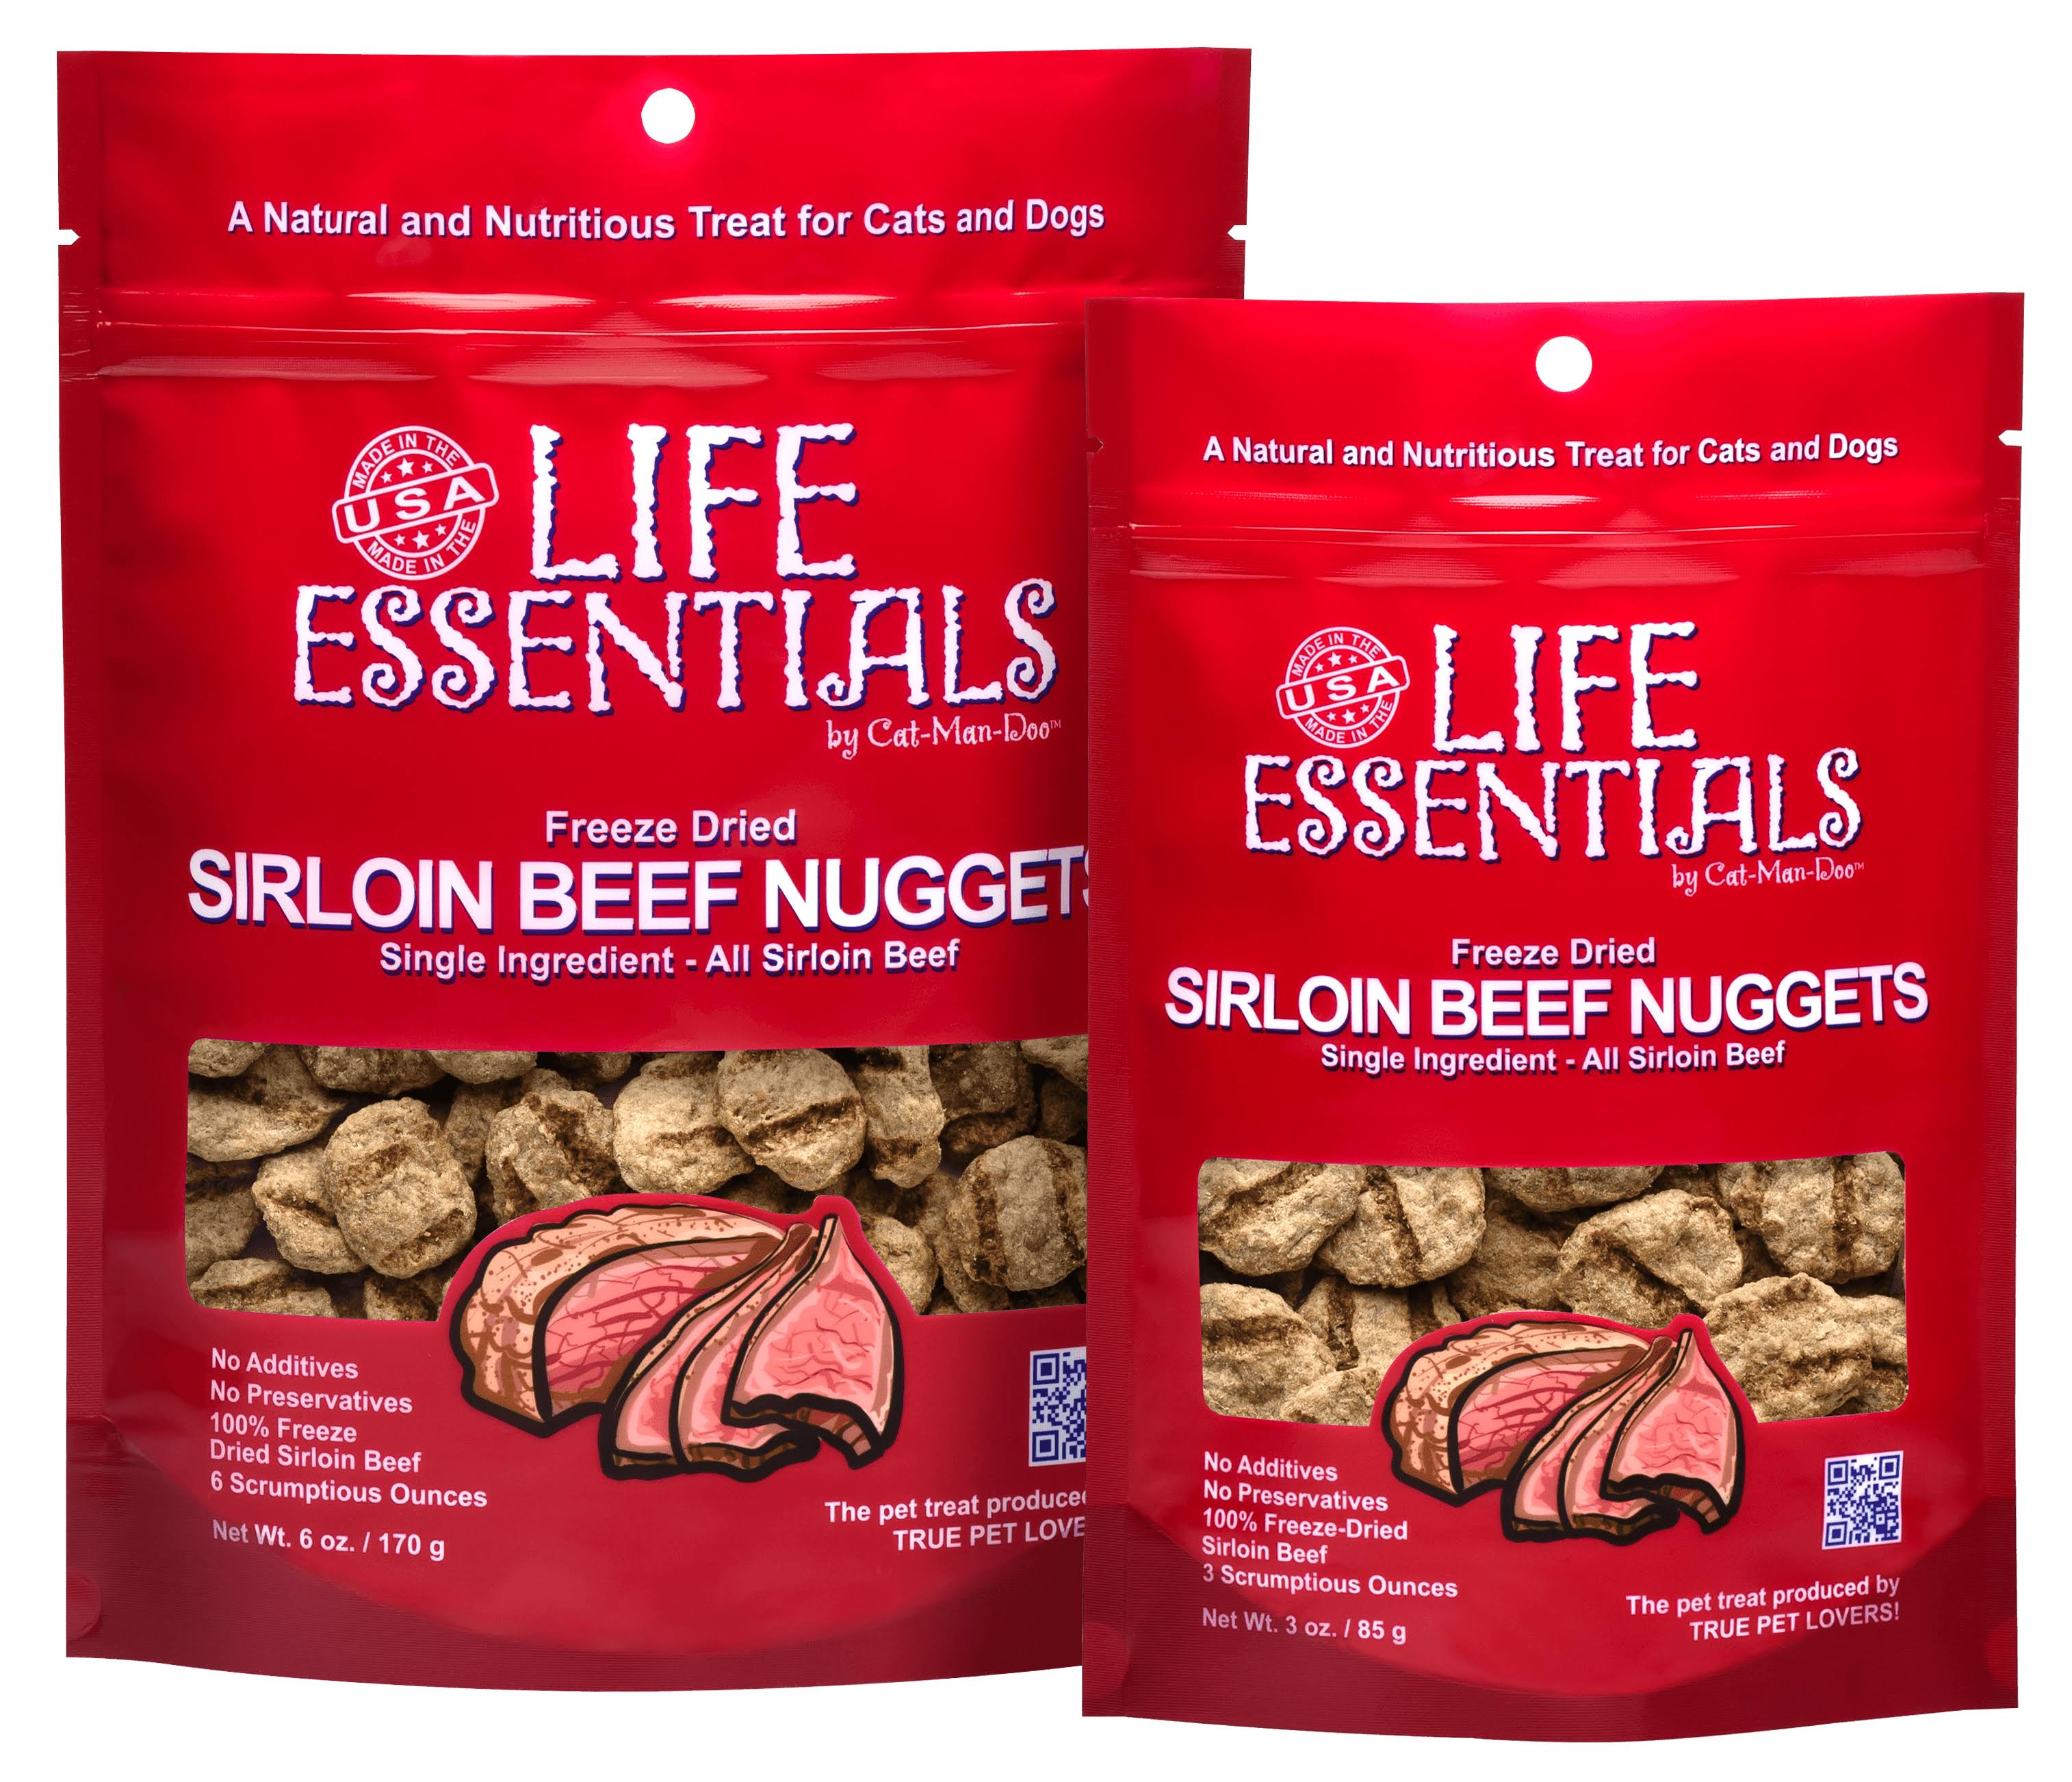 Life Essentials by Cat-Man-Doo Freeze Dried Sirloin Beef, Sirloin Bee